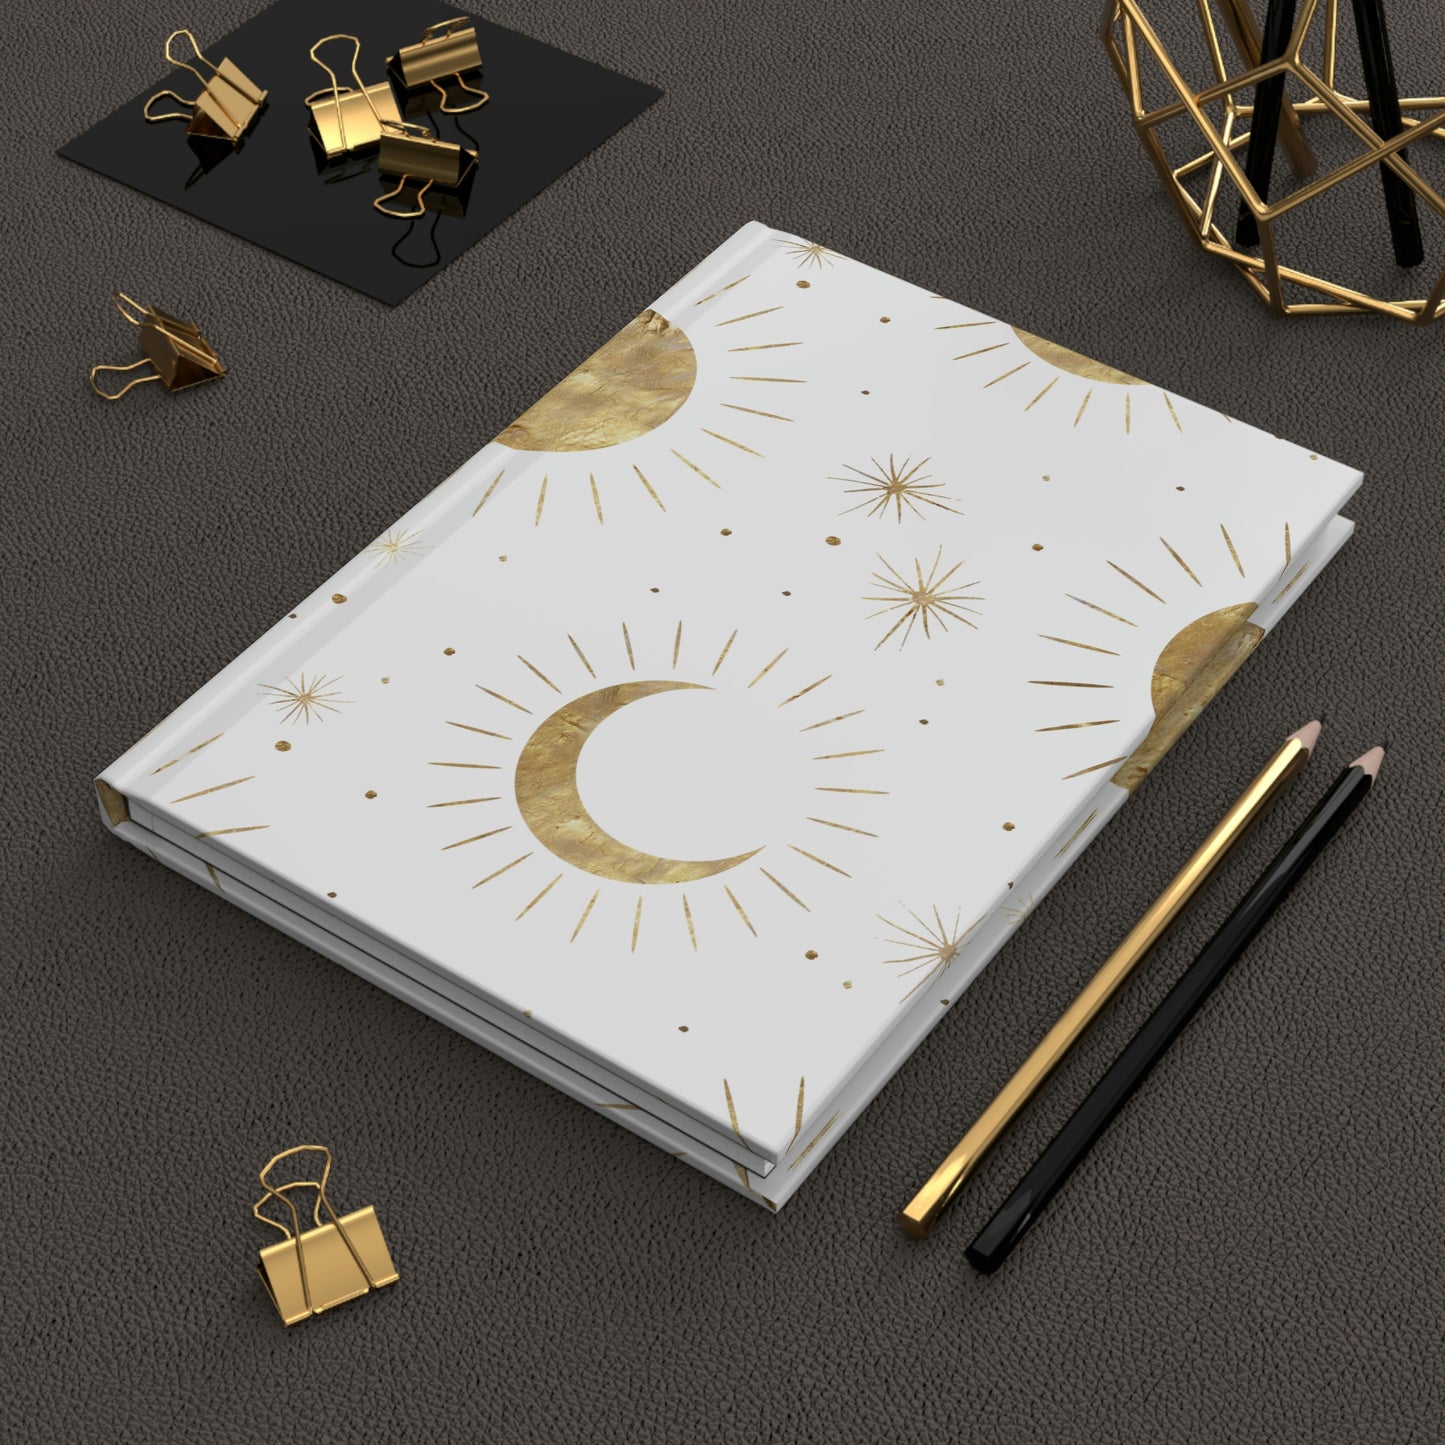 Sun Moon and Stars Journal - Hardcover - White